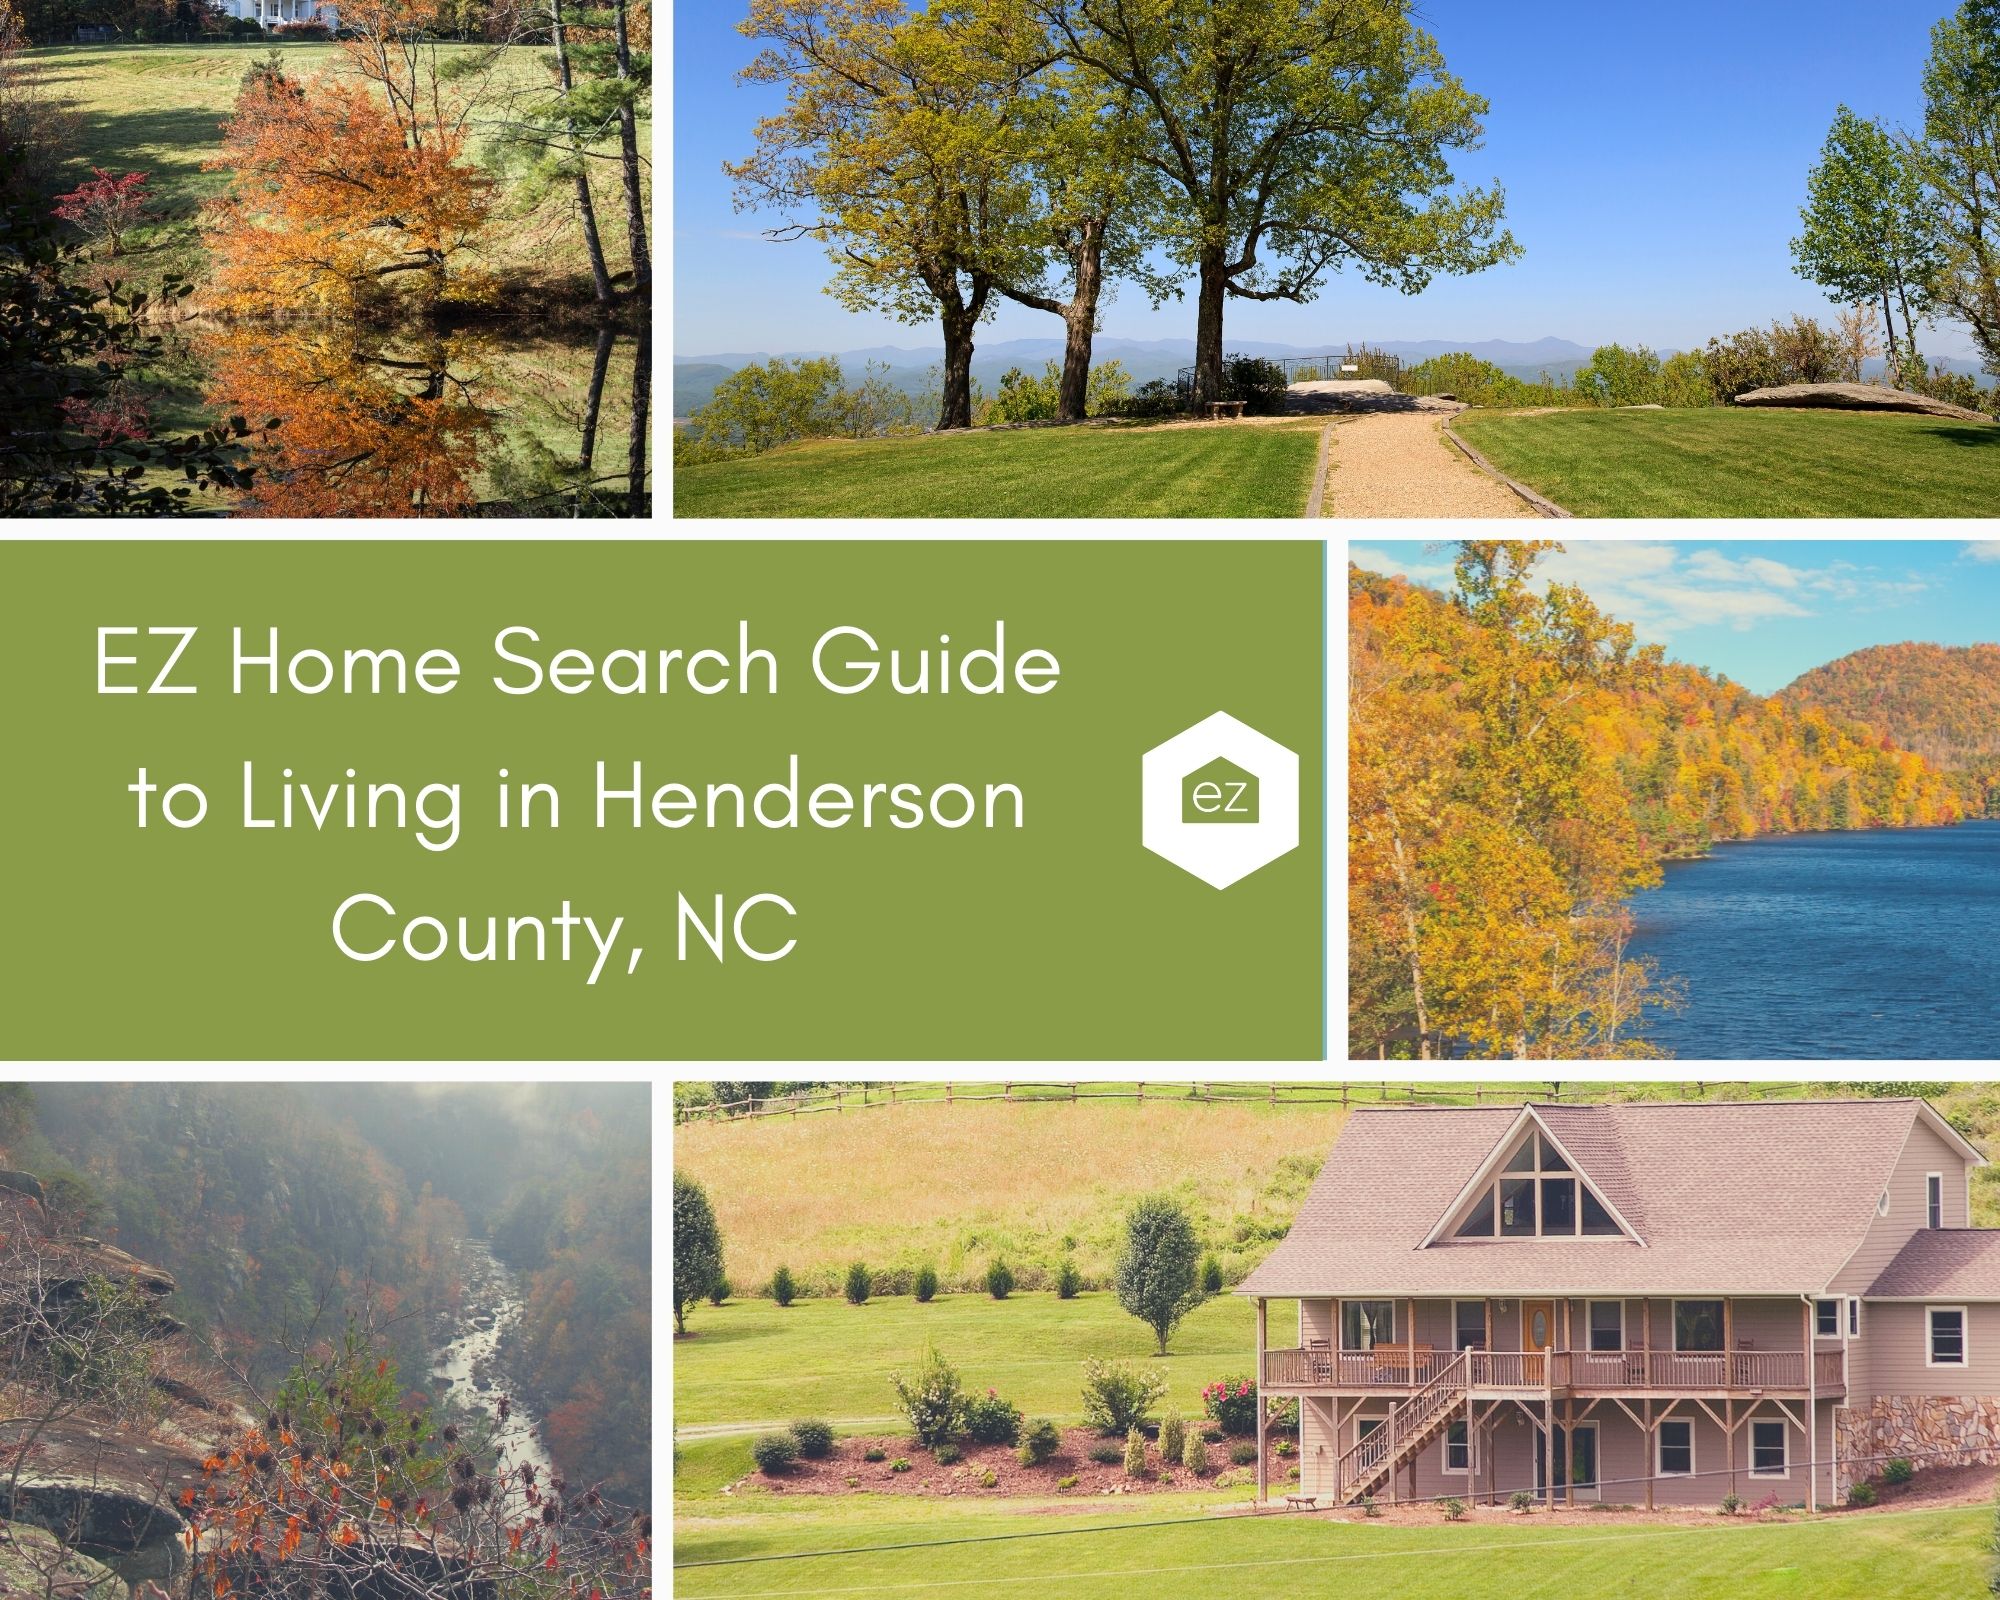 Photos of North Carolina and Henderson County, NC